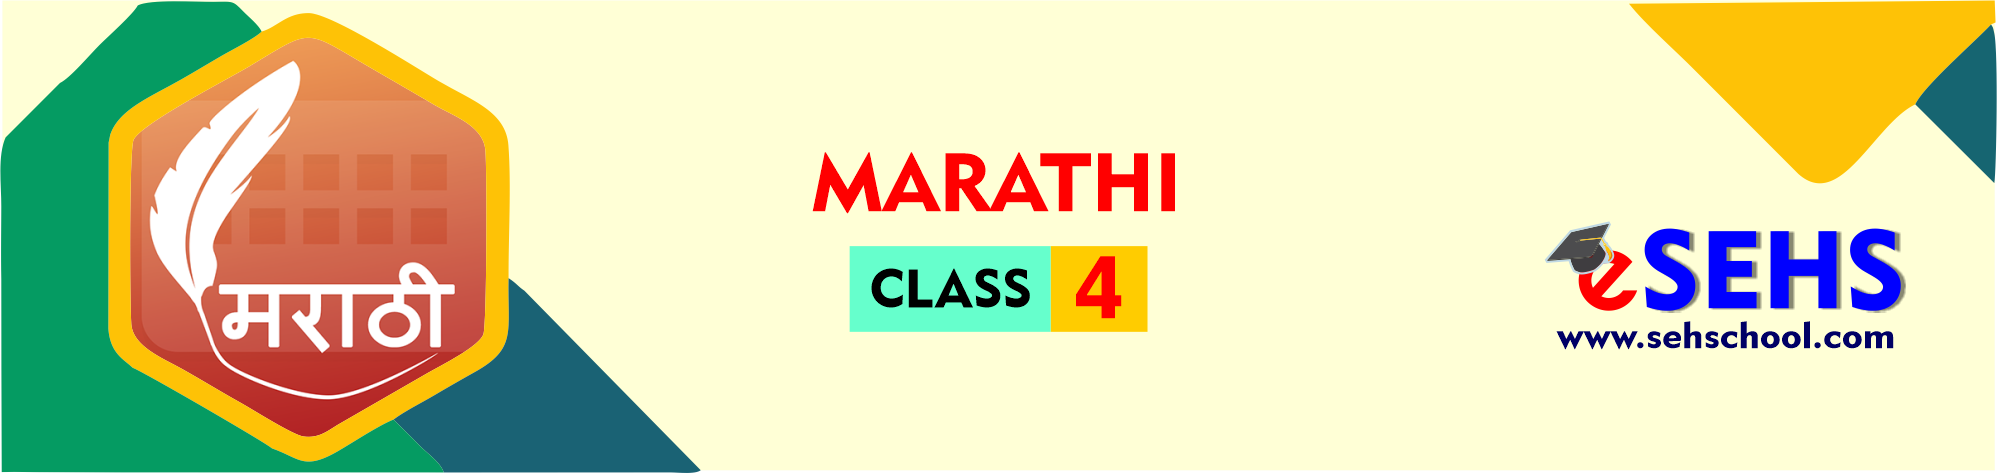 4th marathi